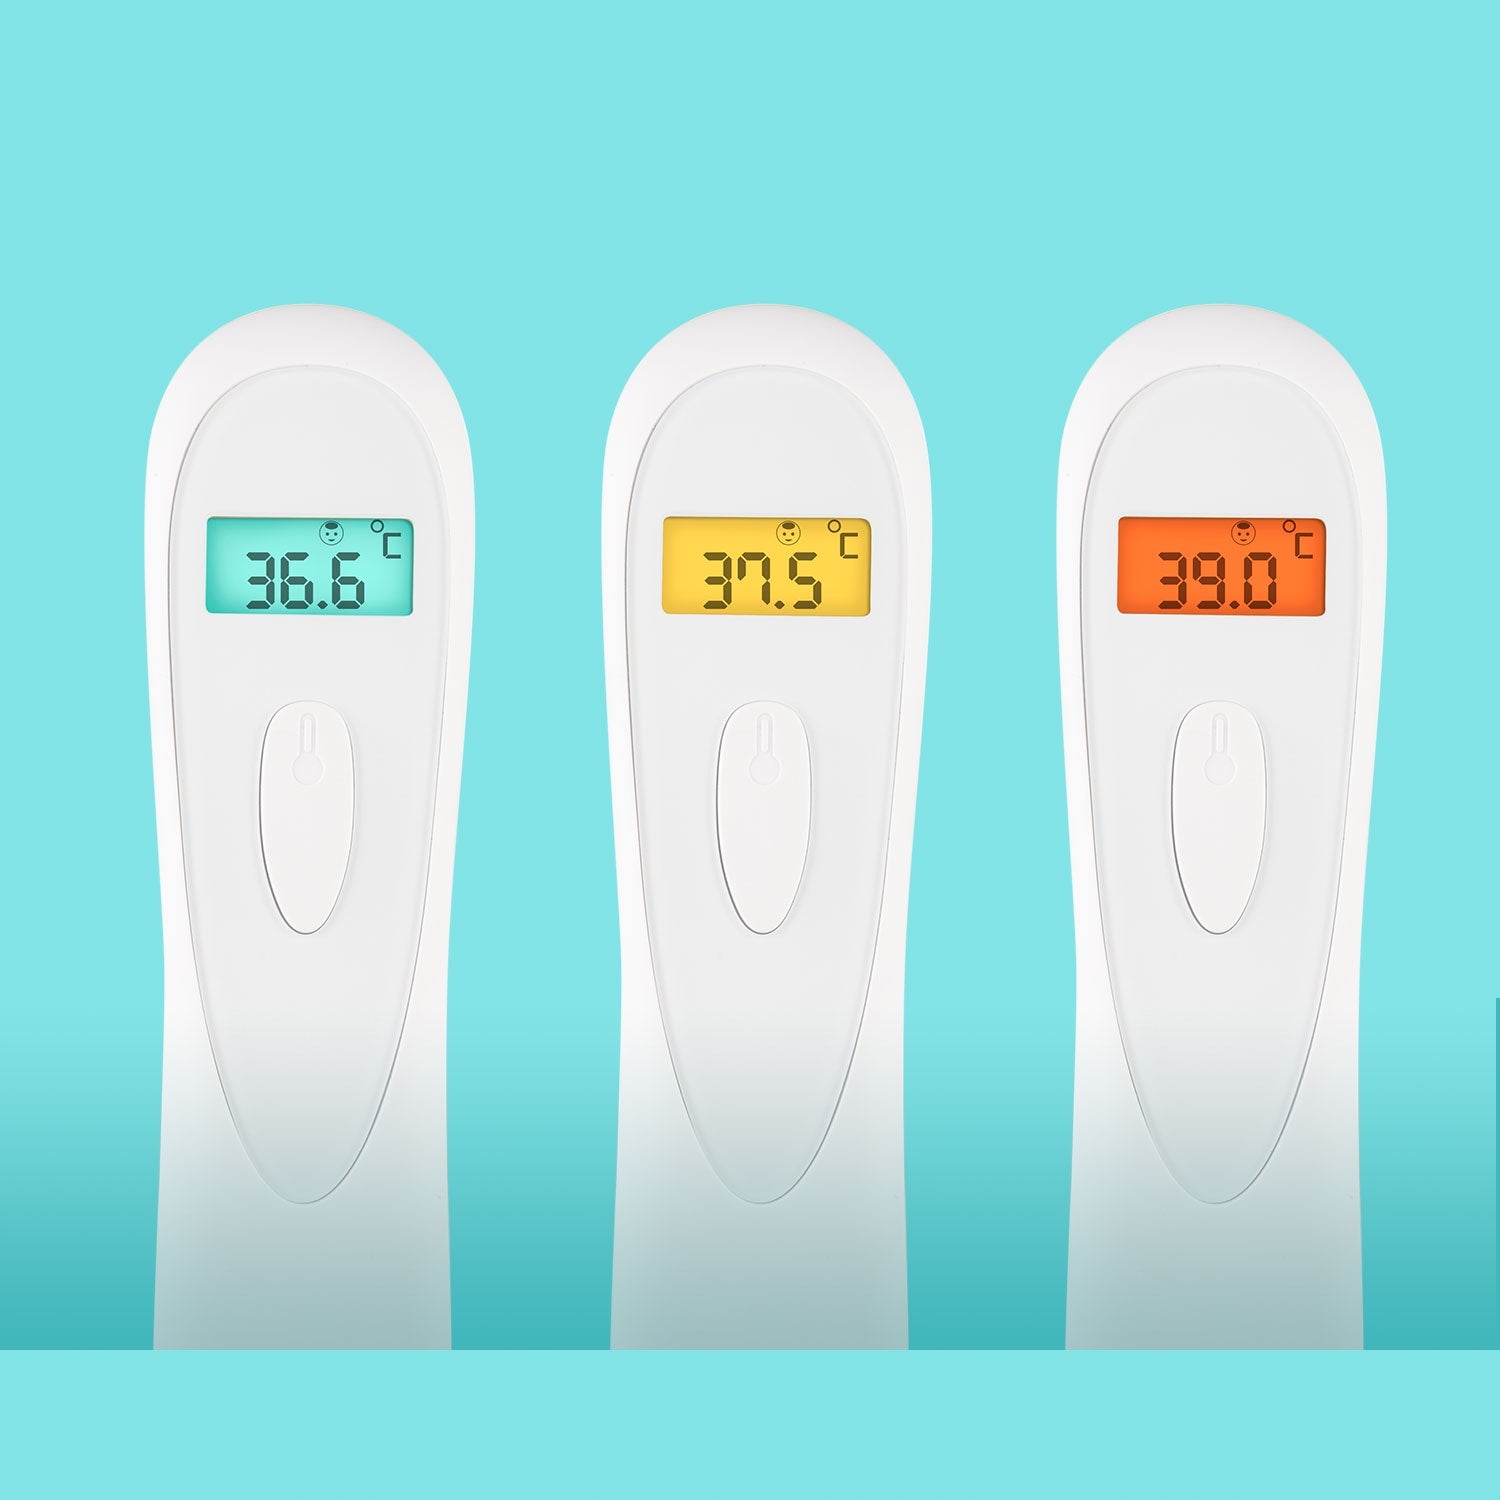 Canpol Babies: Thermomètre infrarouge sans contact EasyStart infrarouge